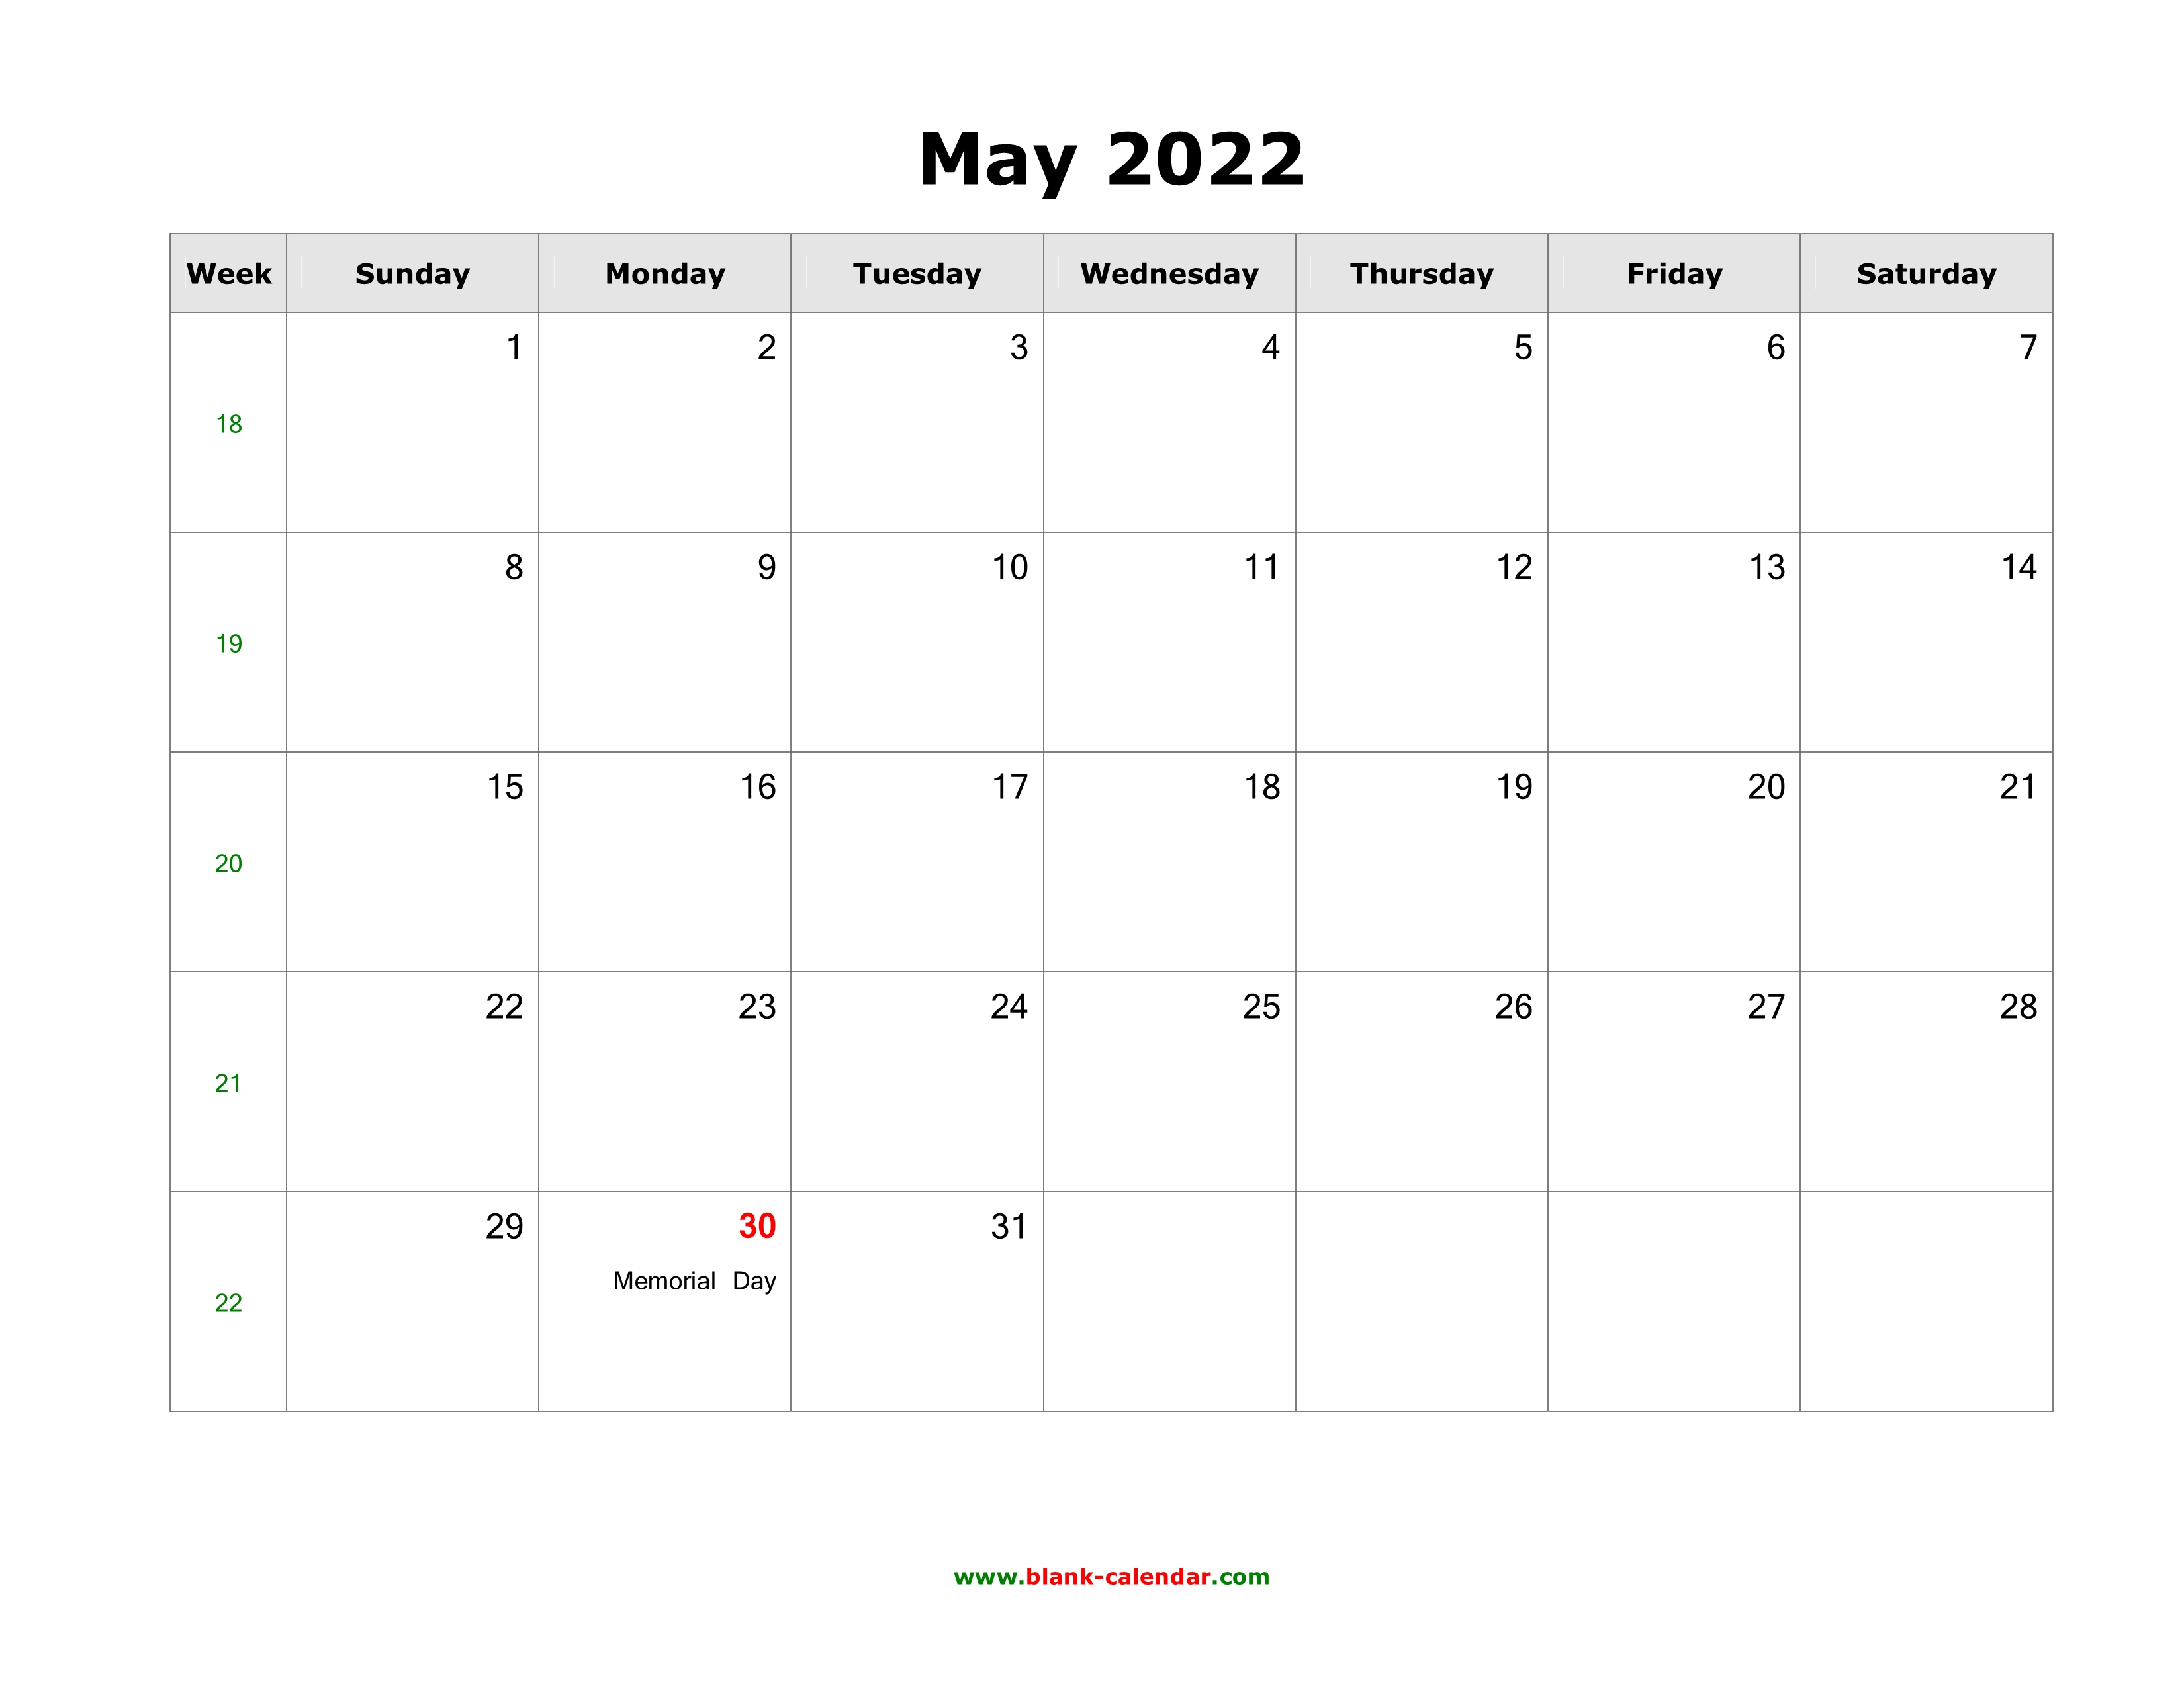 May 2022 Calendar Holidays May 2022 Blank Calendar | Free Download Calendar Templates